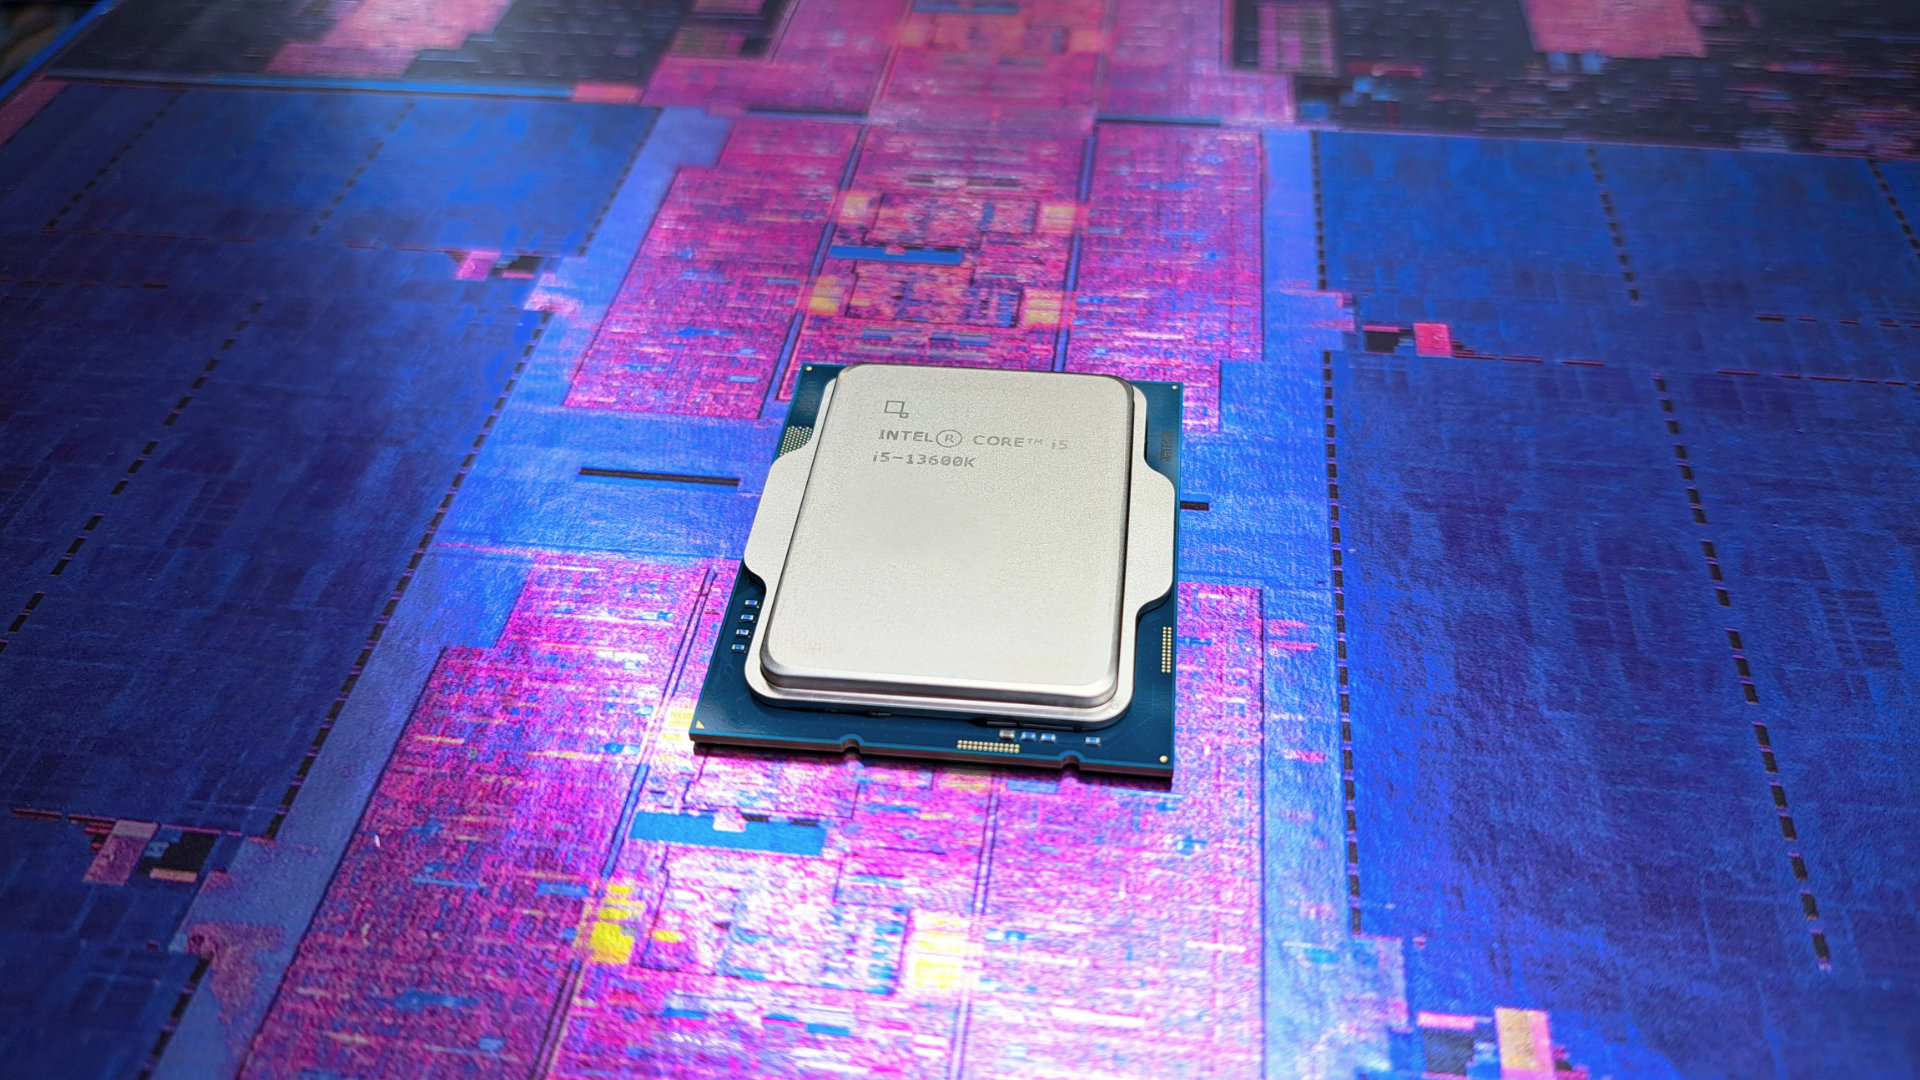 Intel Core i5-13600K Review - Best Gaming CPU - Temperatures